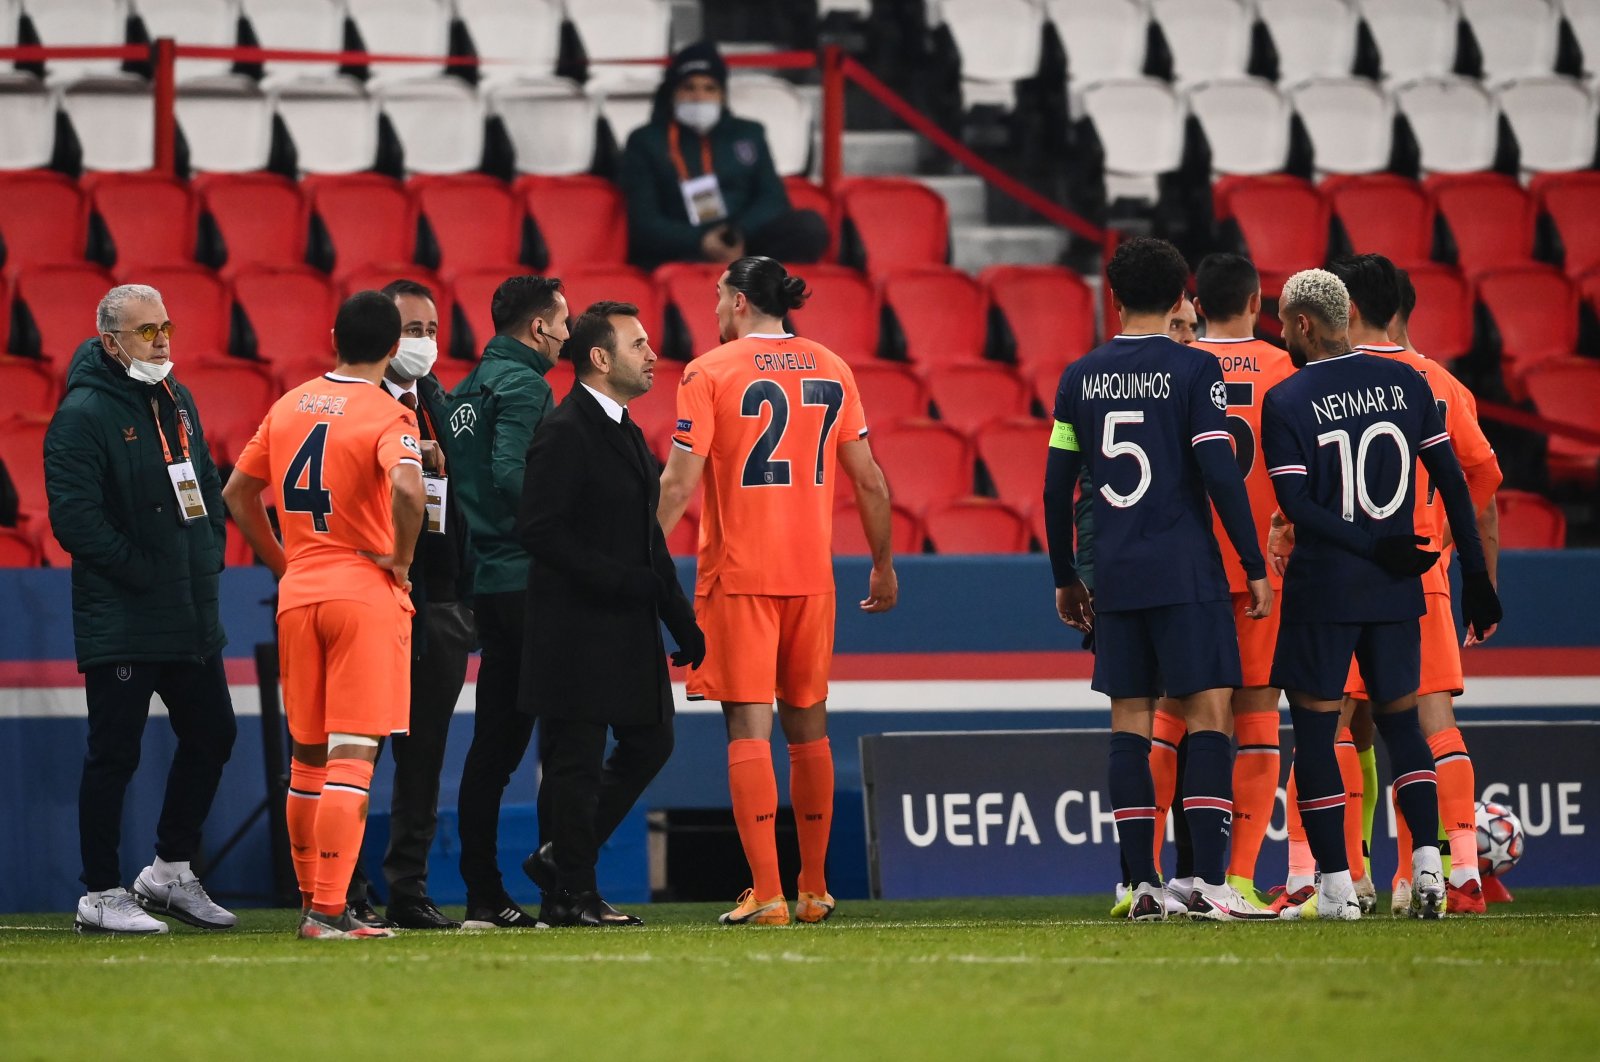 PSGBaşakşehir Champions League match suspended over alleged racist